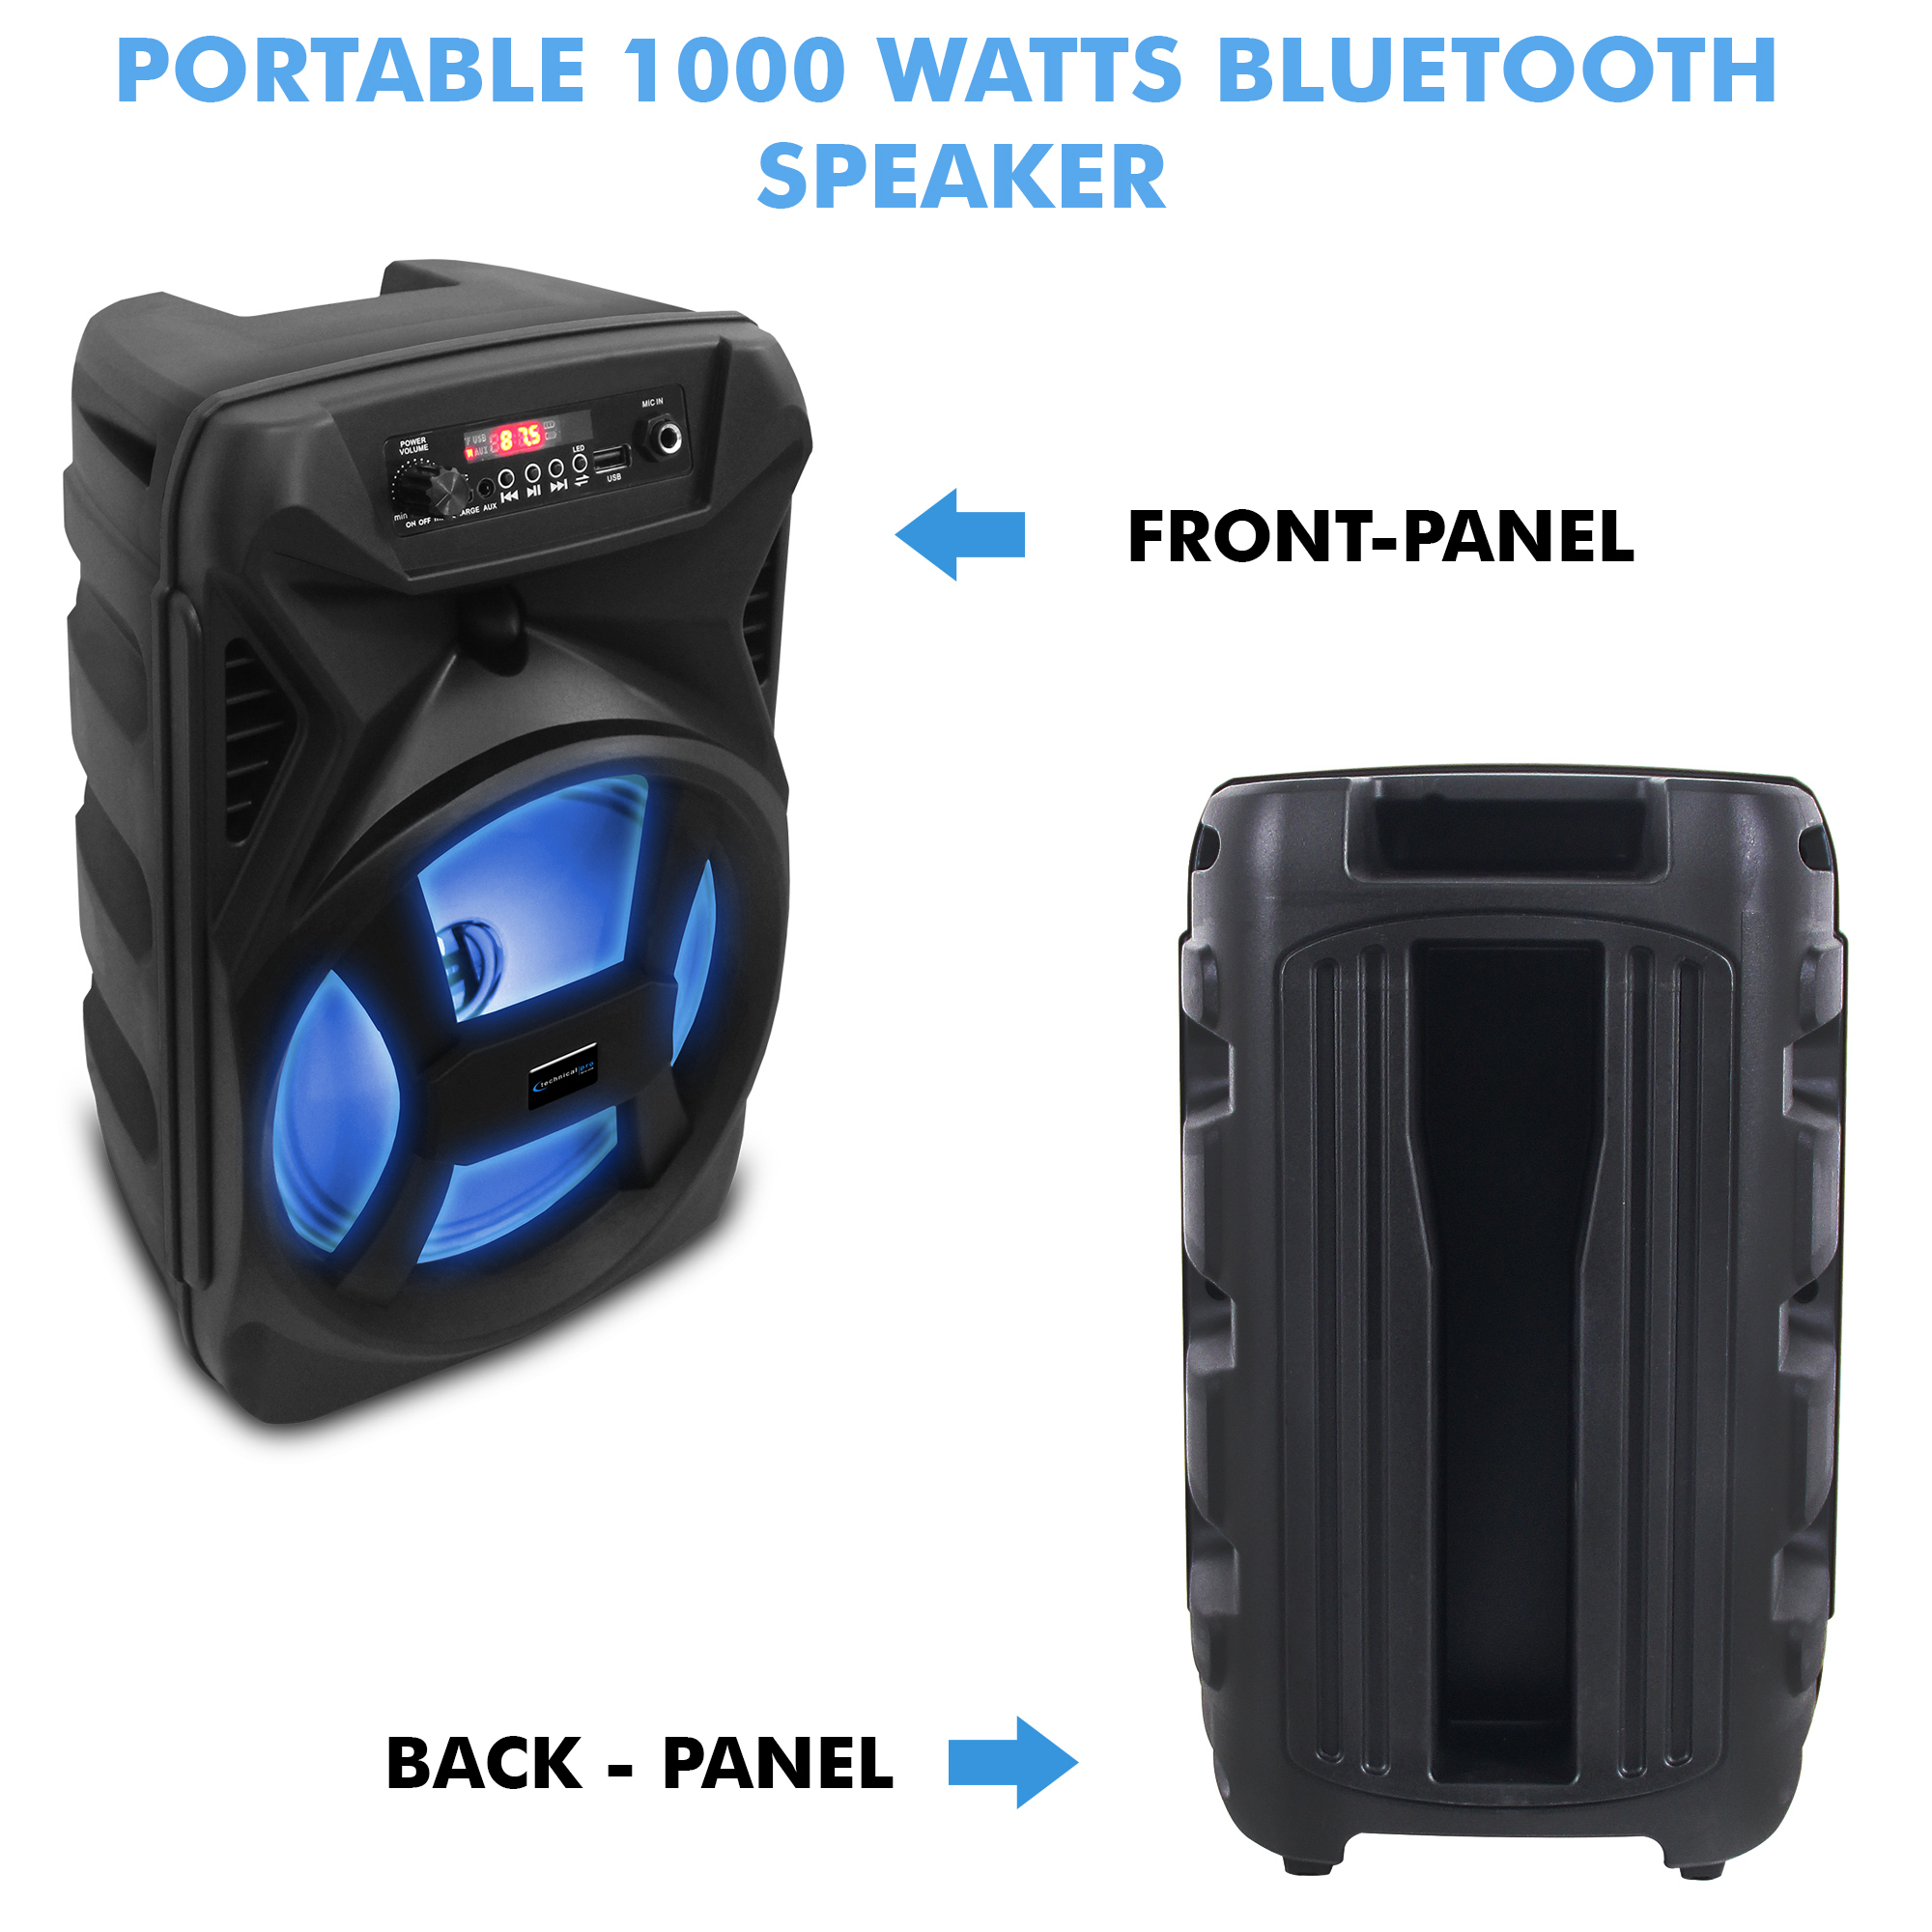 (Qty-2) Technical Pro 8 Inch Portable 500 Watts Bluetooth Festival PA LED Speaker W/ Woofer & Tweeter, USB Card Inputs, True Wireless Stereo